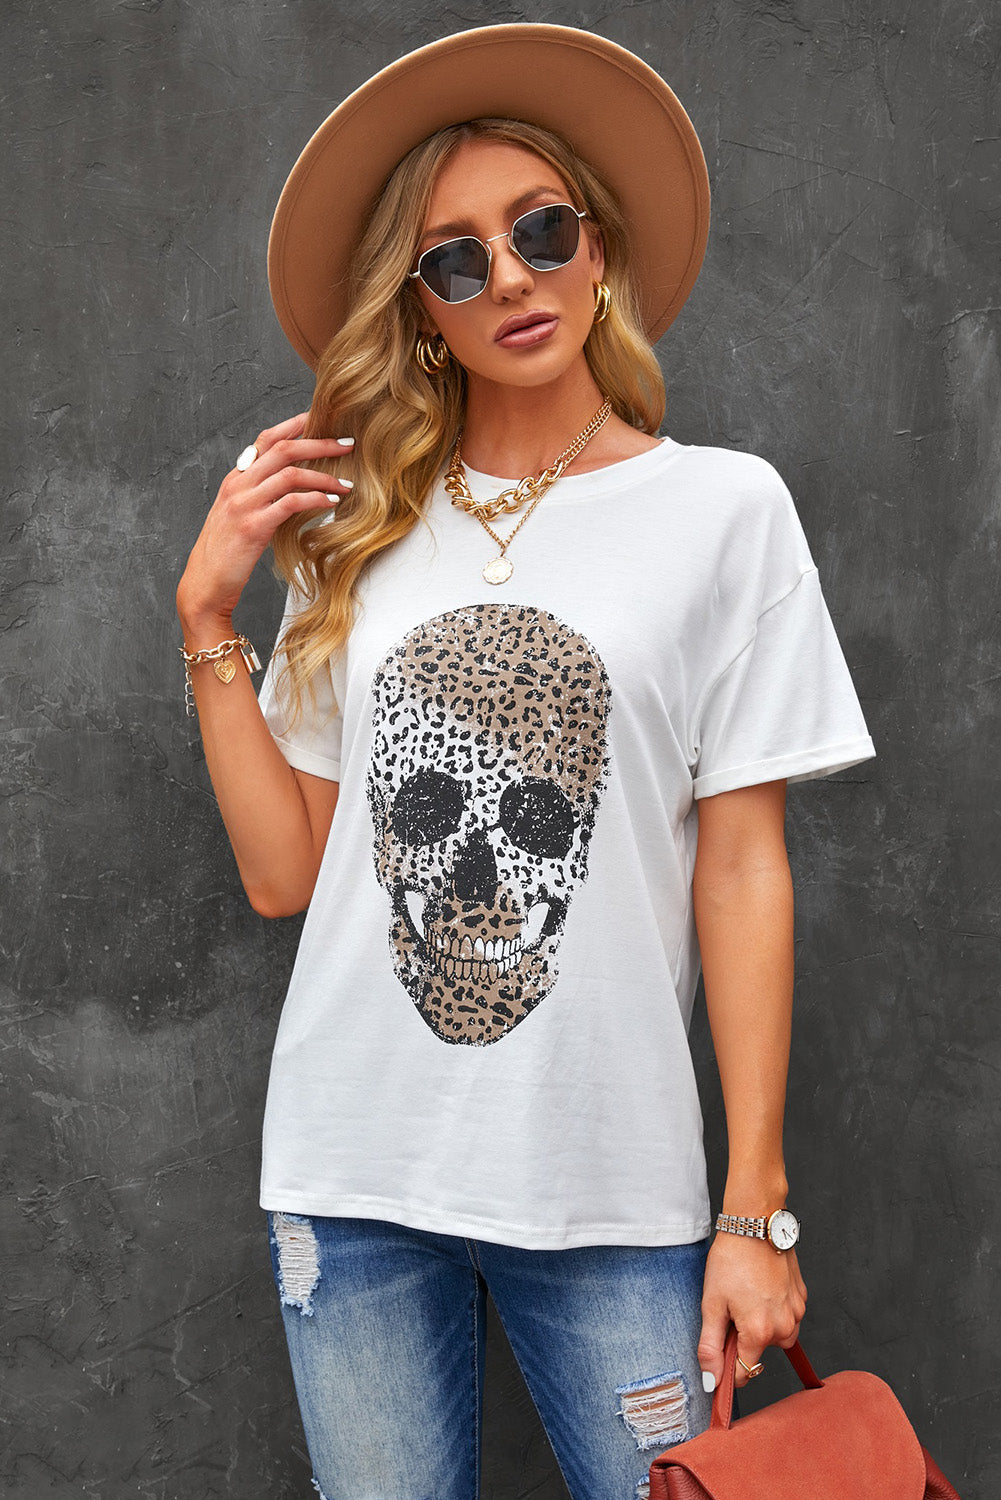 Leopard Skull Graphic Tee Shirt - PINKCOLADA